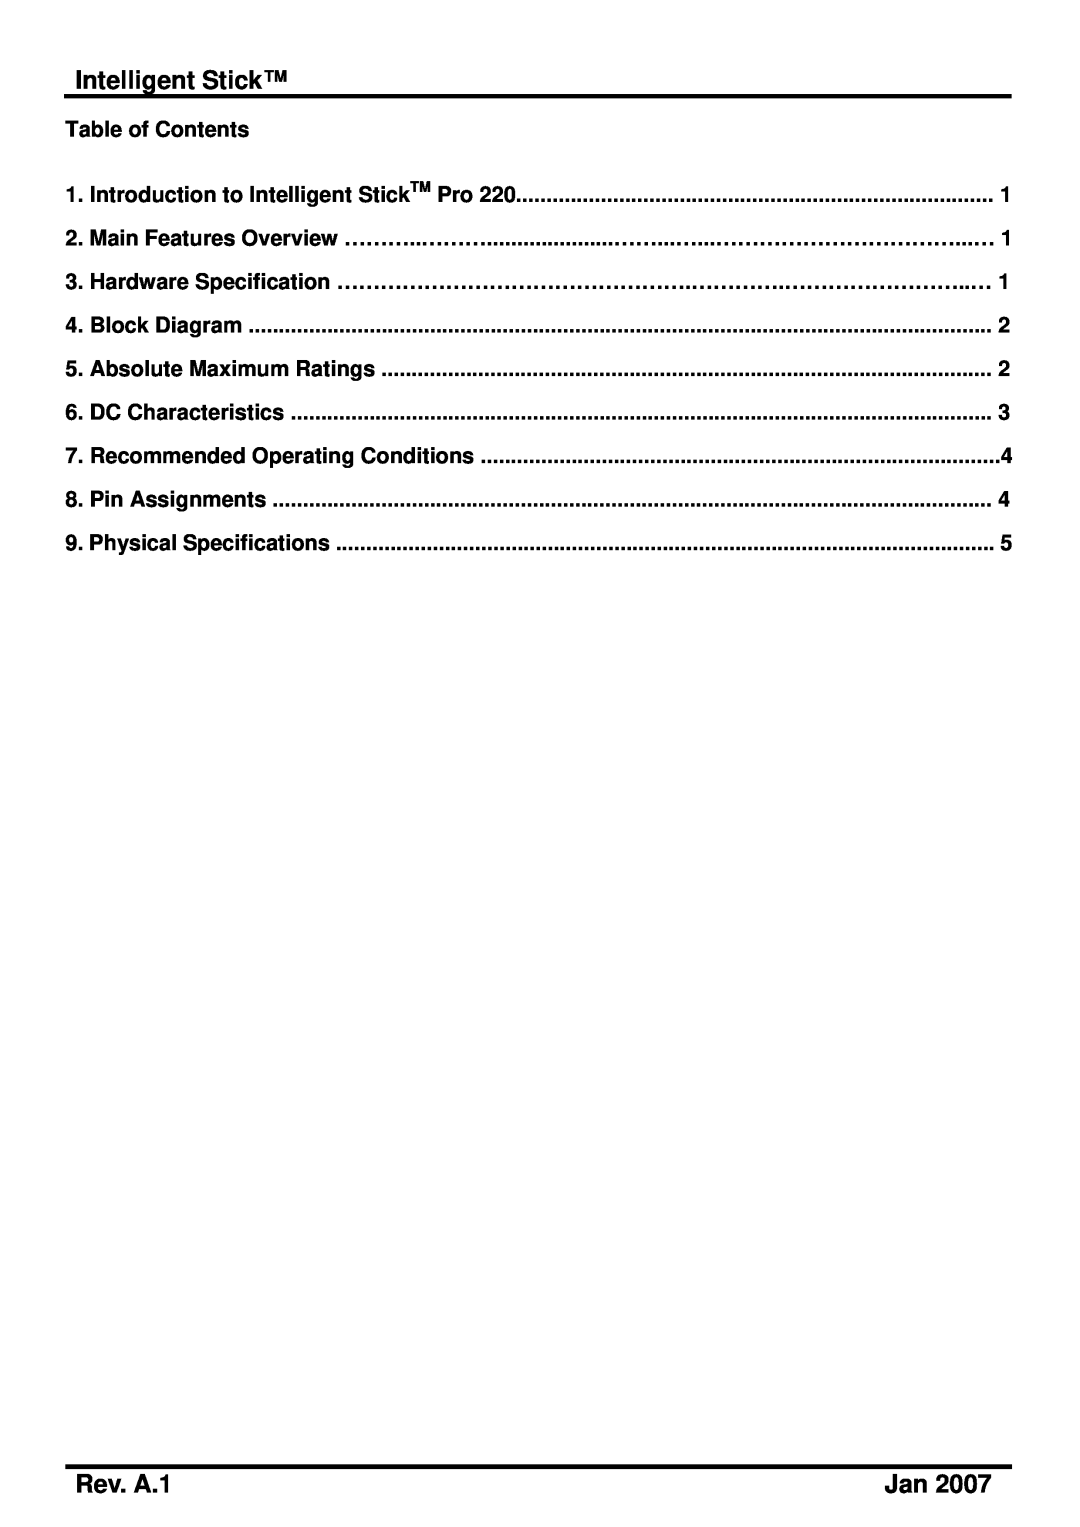 PQI Pro 220 manual Intelligent Stick, Rev. A.1, Table of Contents 